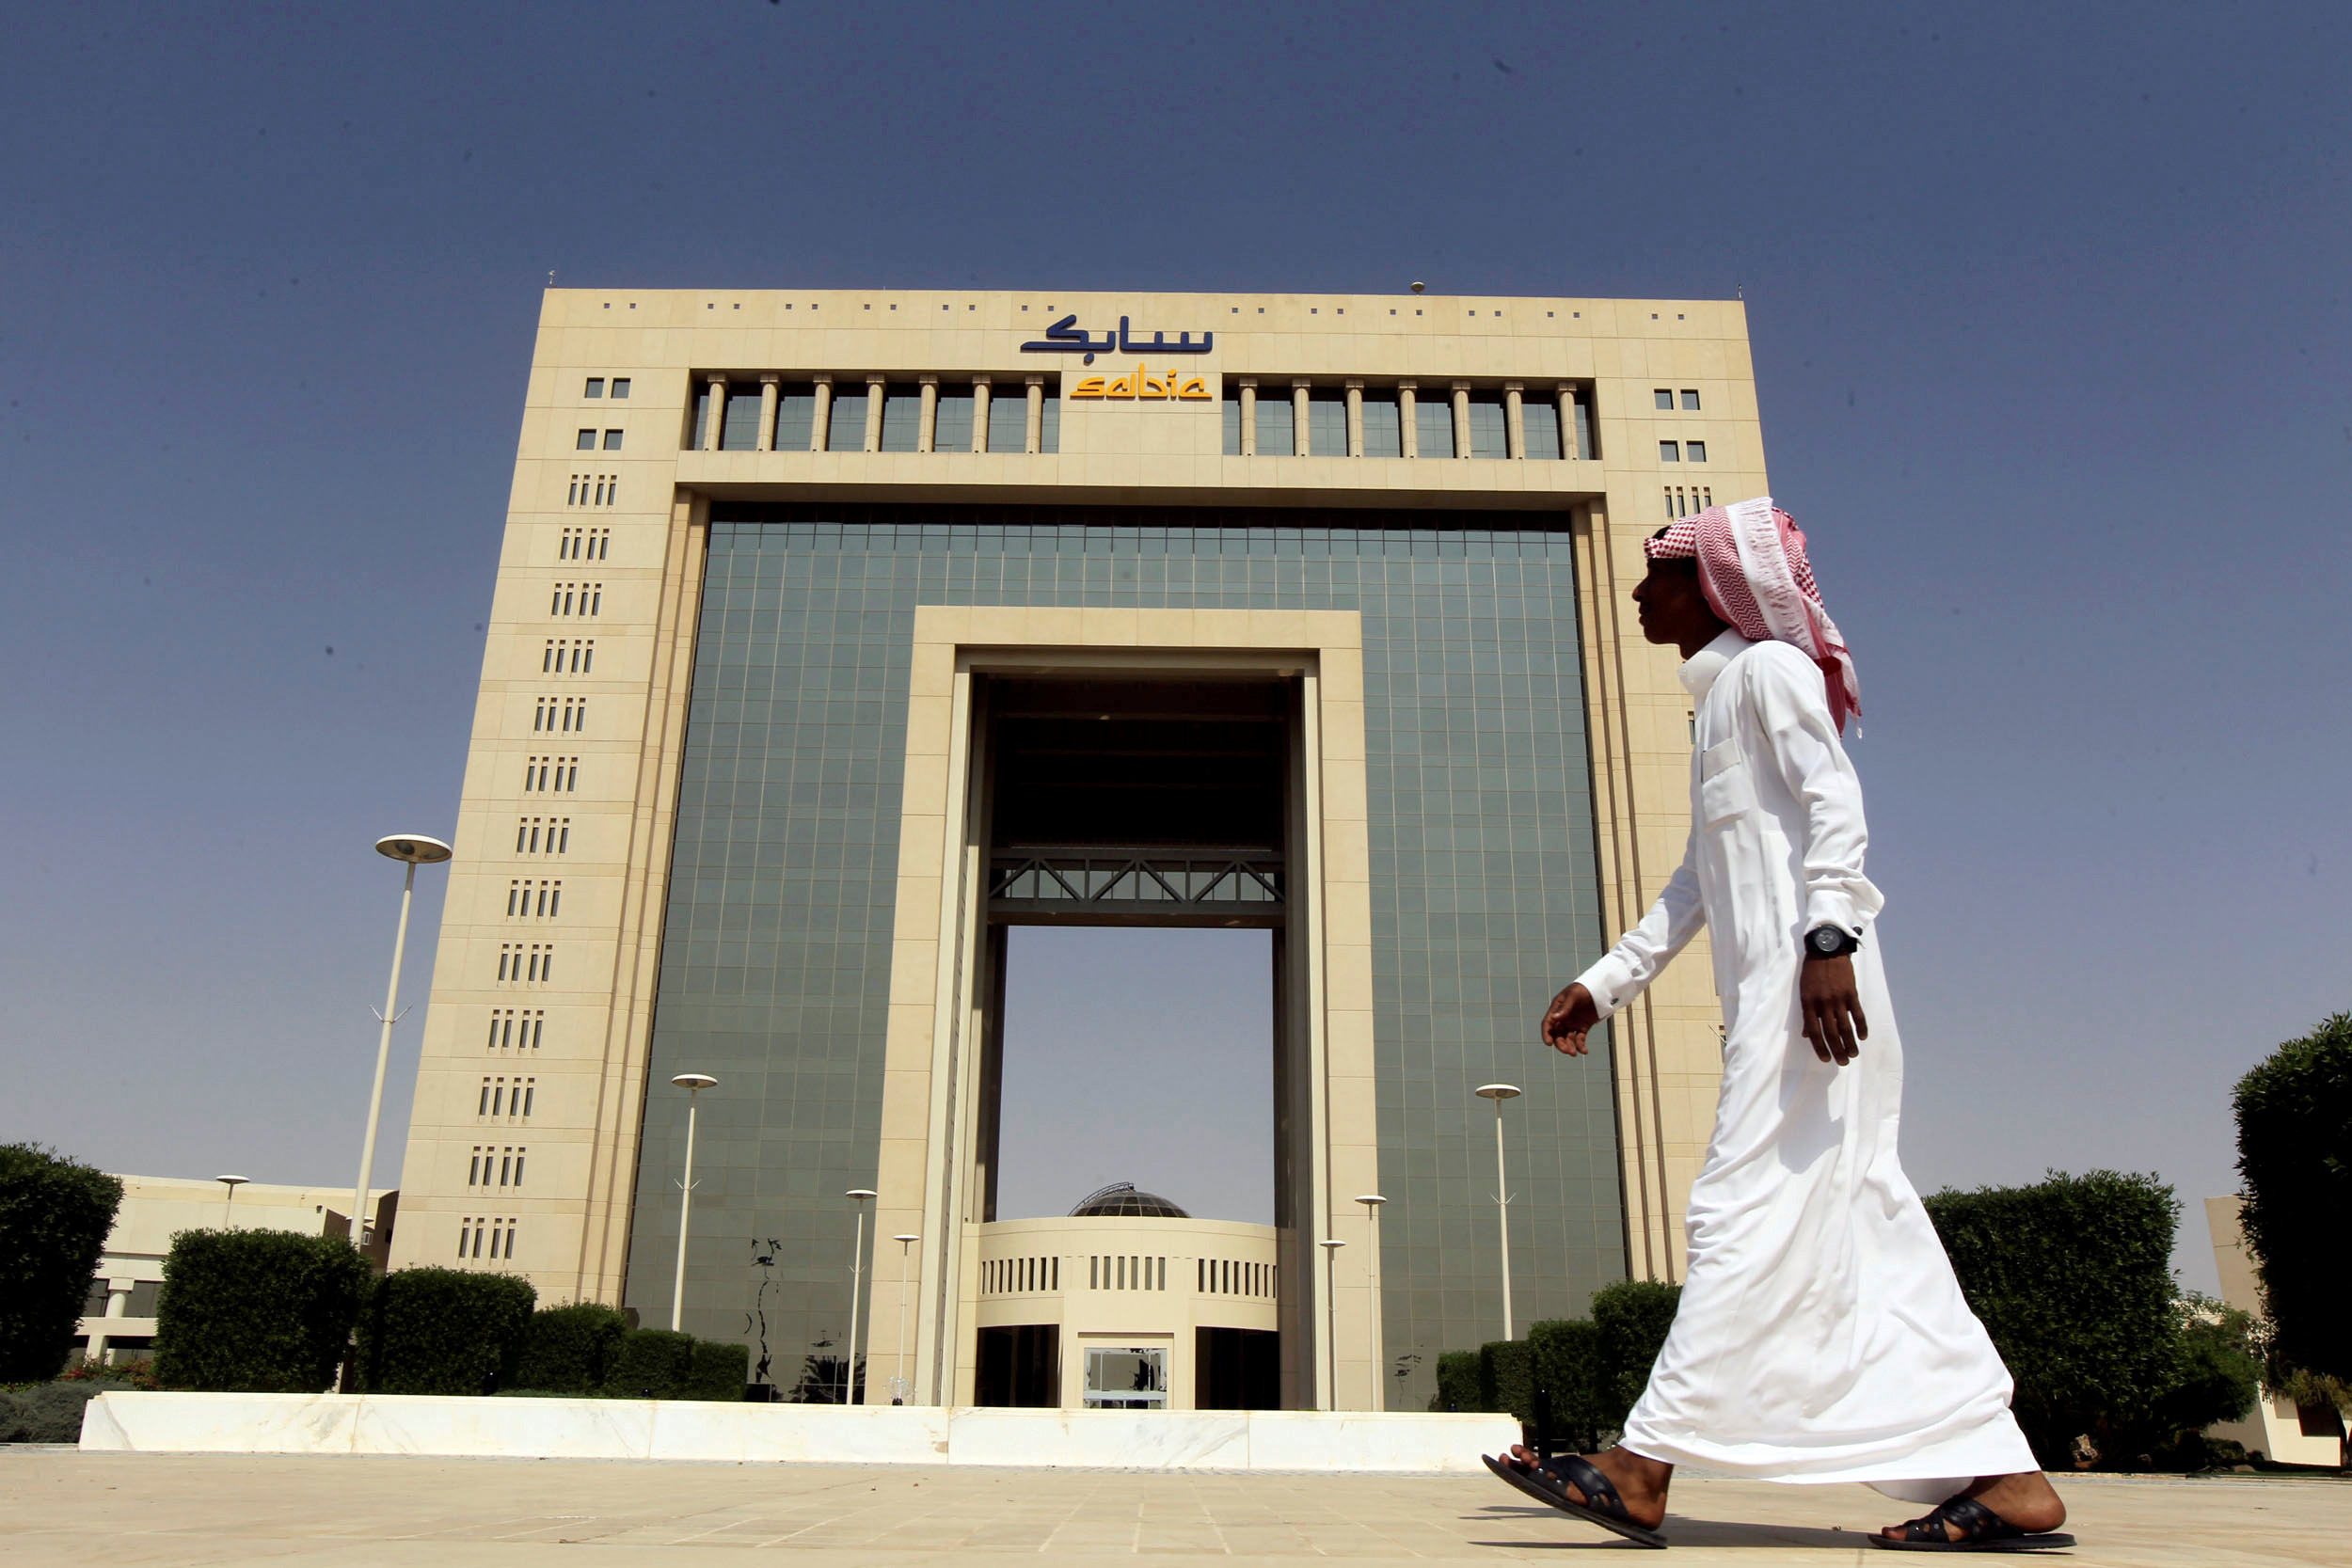 A man walks past the headquarters of Saudi Basic Industries Corp (SABIC) in Riyadh